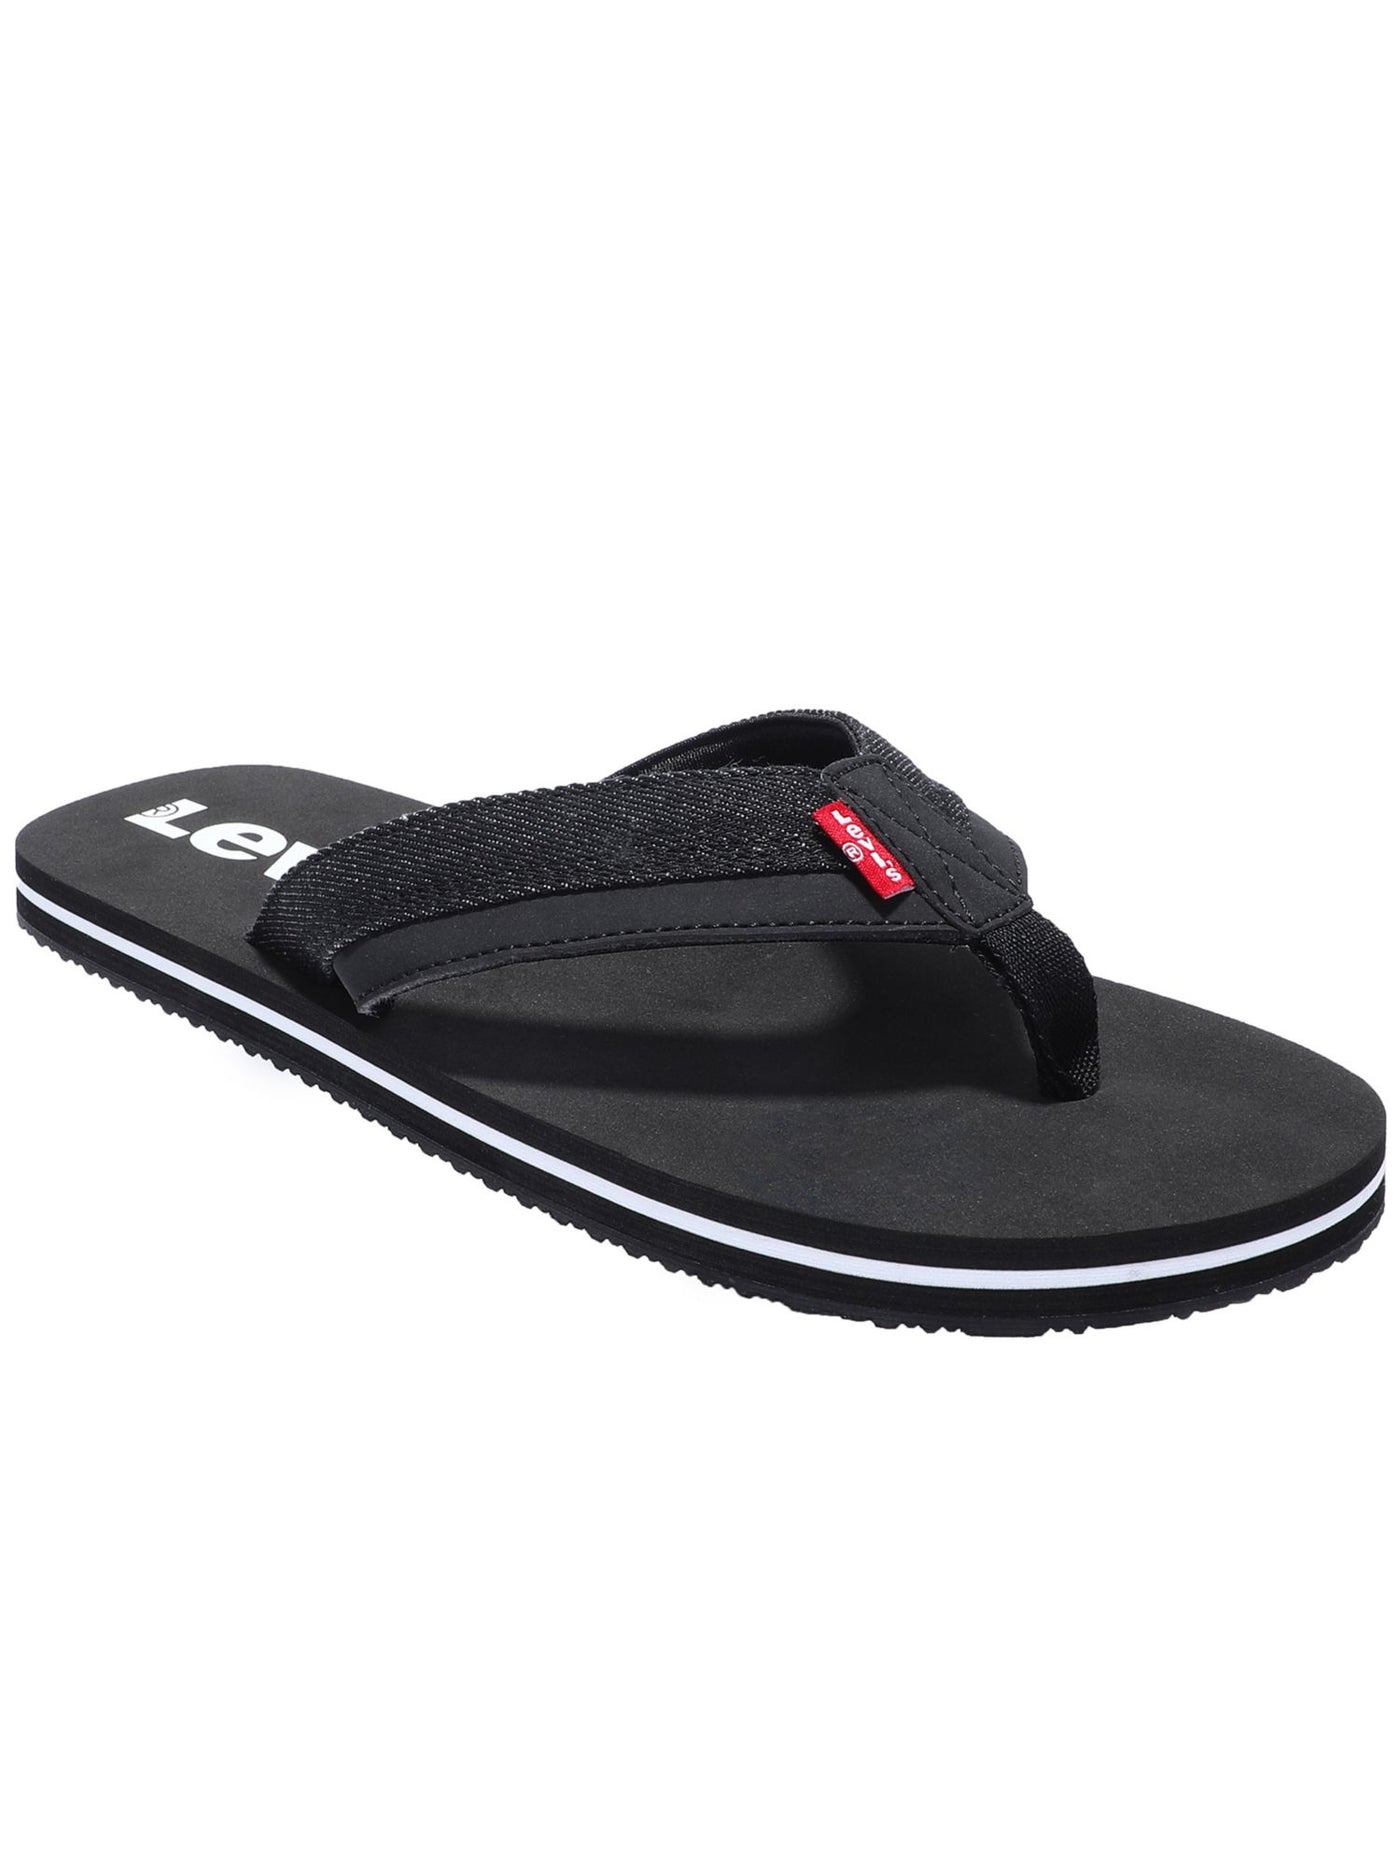 LEVI'S Mens Black Mixed Media Padded Wordmark Strap Open Toe Slip On Thong Sandals Shoes 10.5